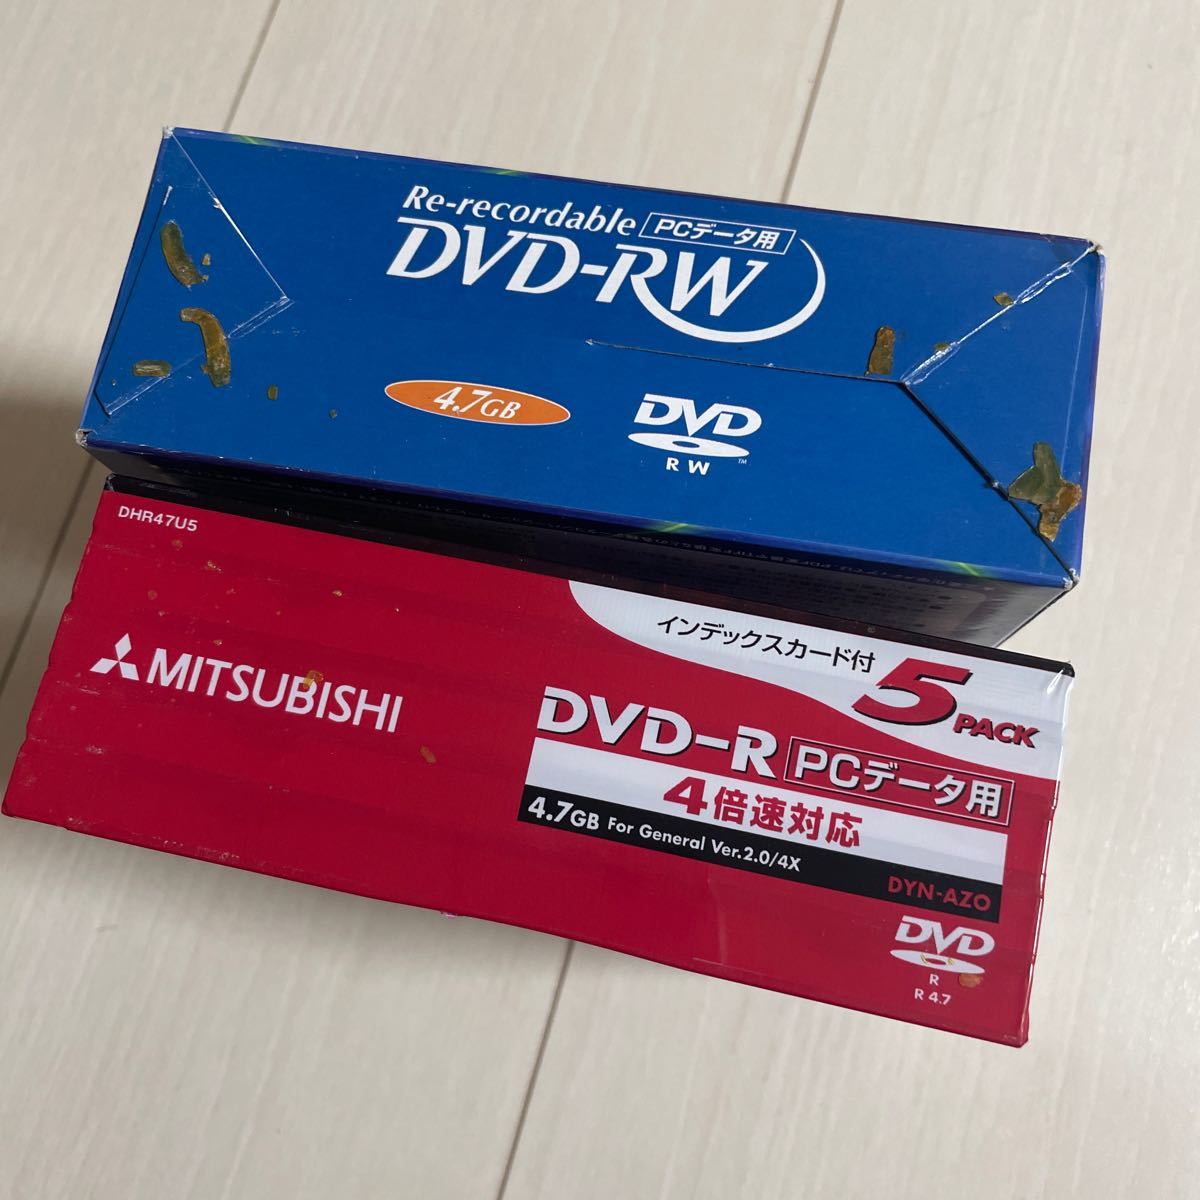 maxell DVD-RAM DVD-R FUJIFILMmak cell DVD Victor видеозапись для BD-RE DVD-RW Mitsubishi DVD-rw PC данные для 4.7gb